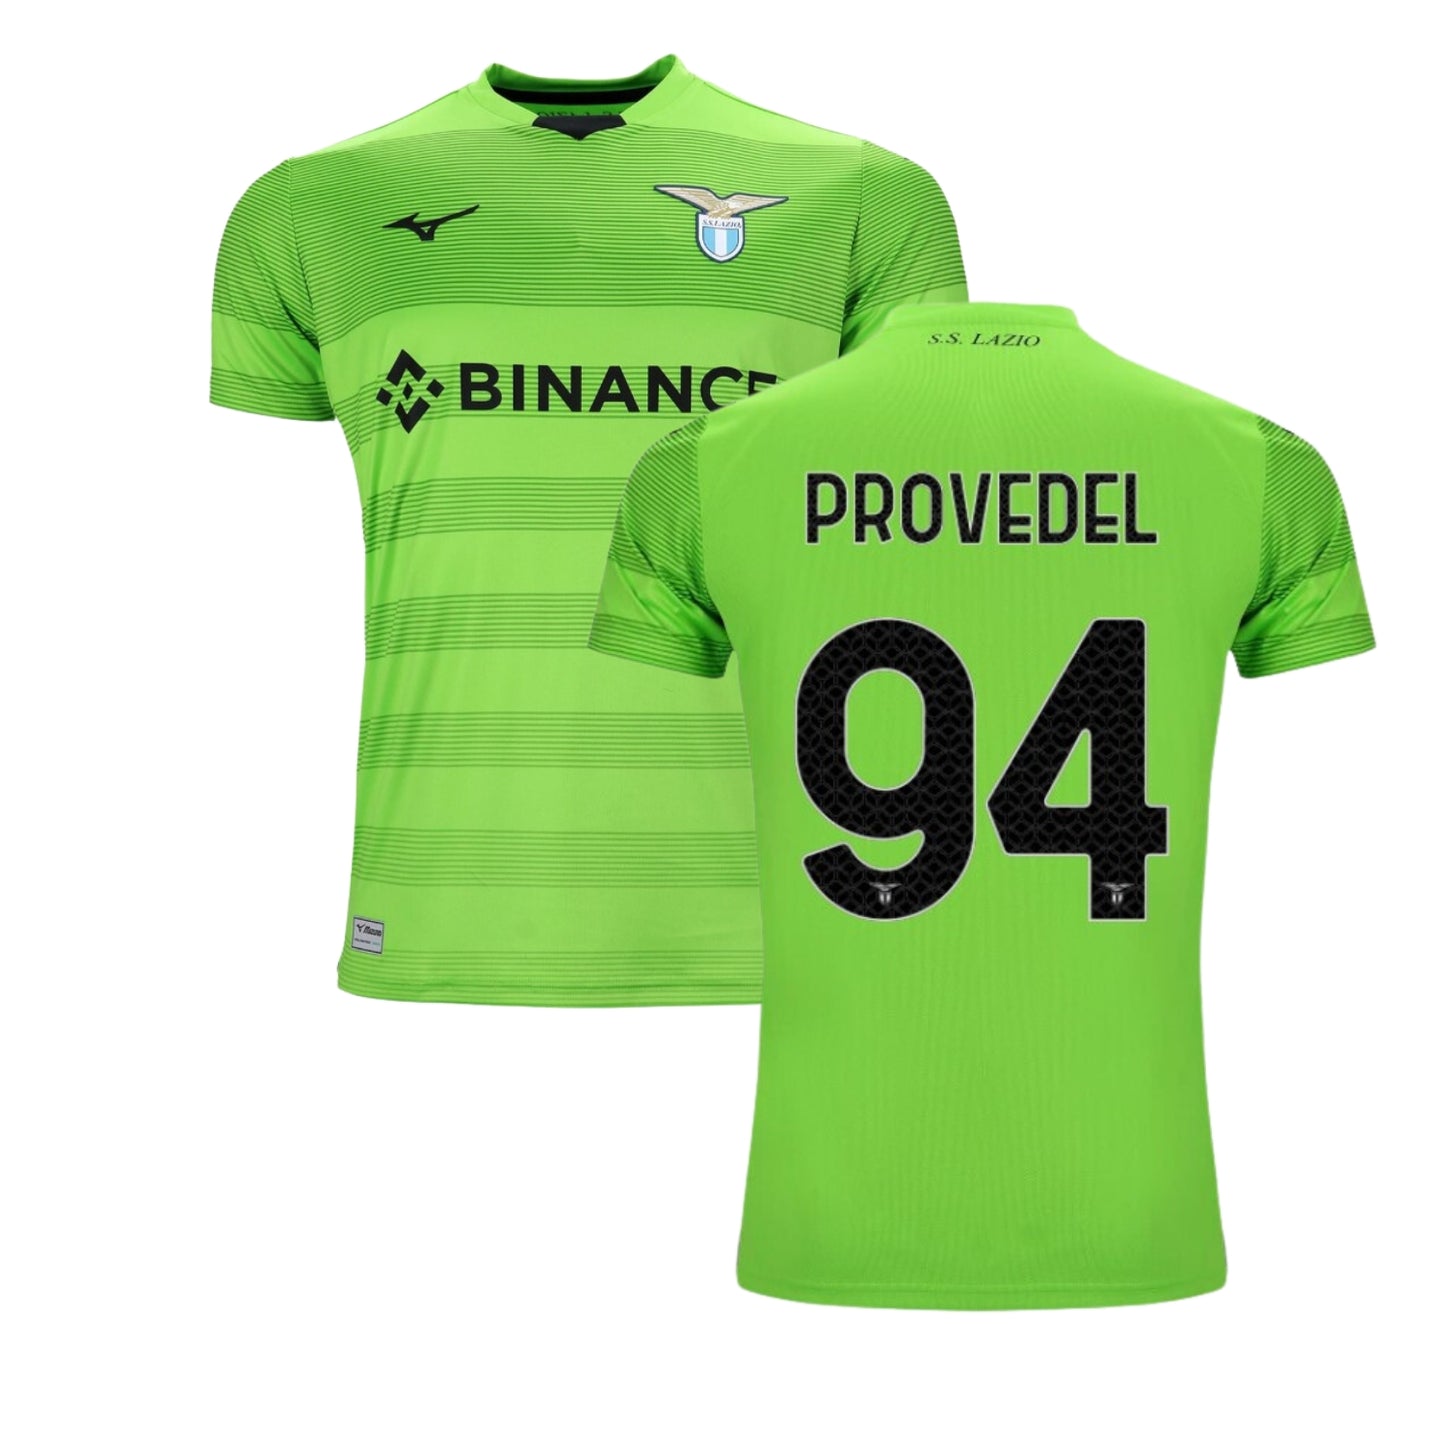 Ivan Provedel Napoli 94 Jersey